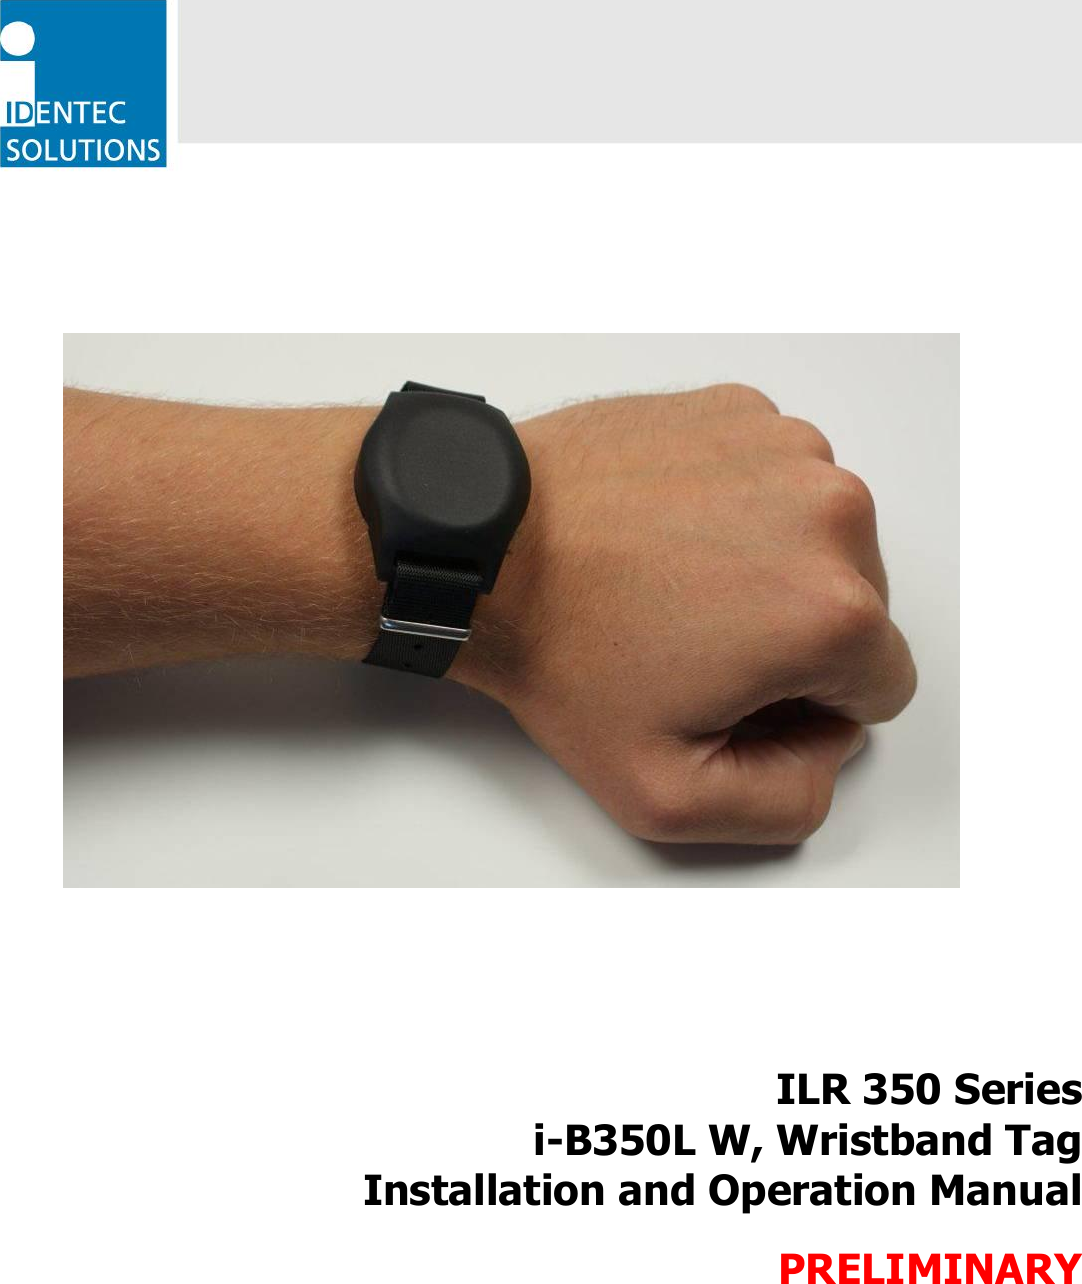            ILR 350 Series i-B350L W, Wristband Tag Installation and Operation Manual  PRELIMINARY 